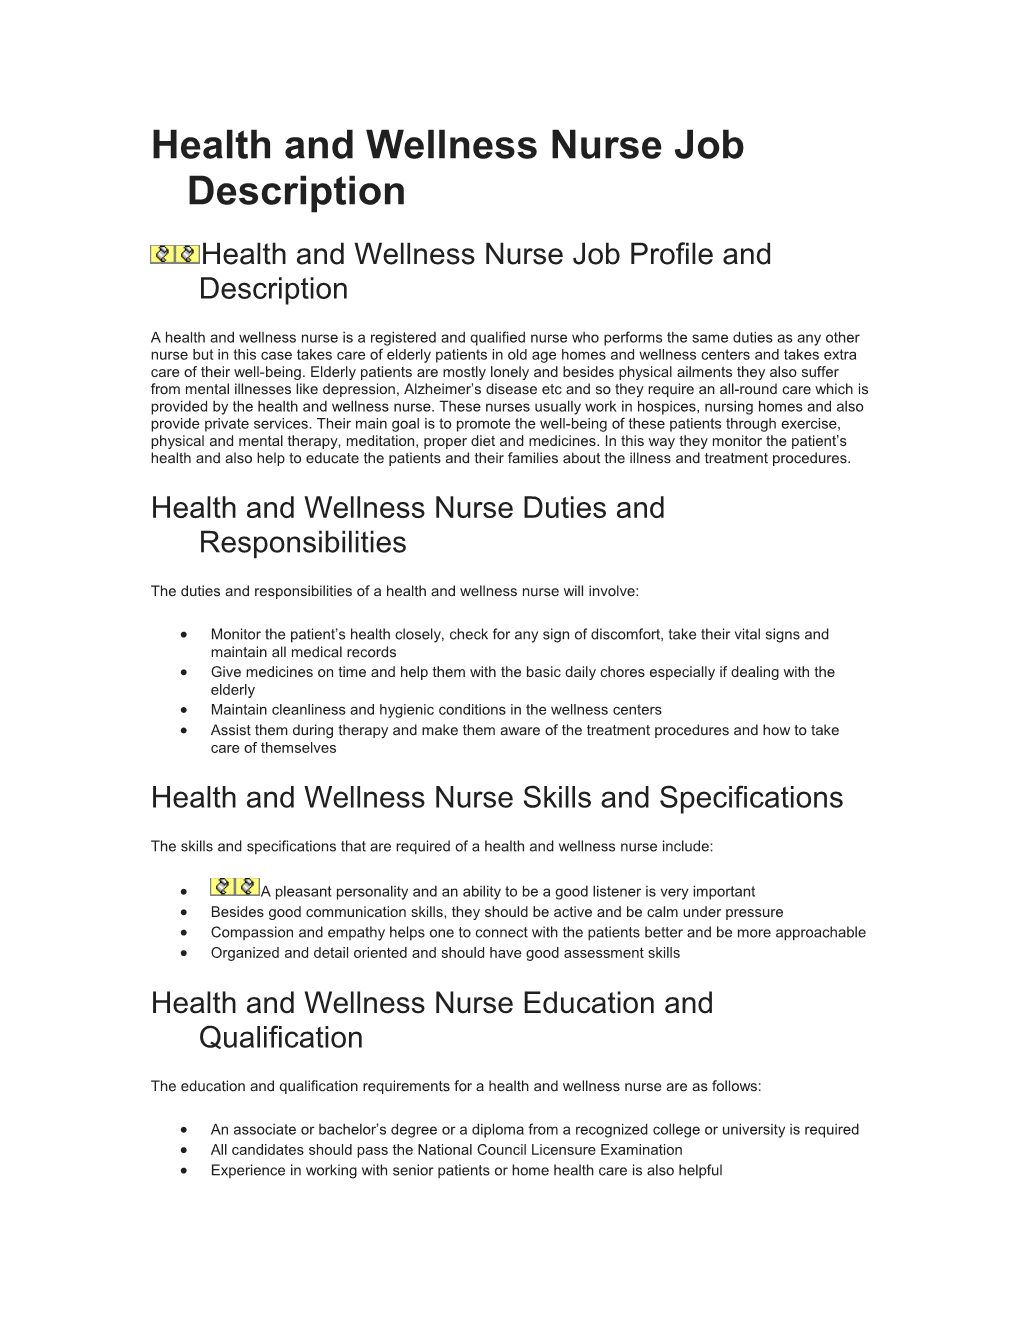 Health and Wellness Nurse Job Description